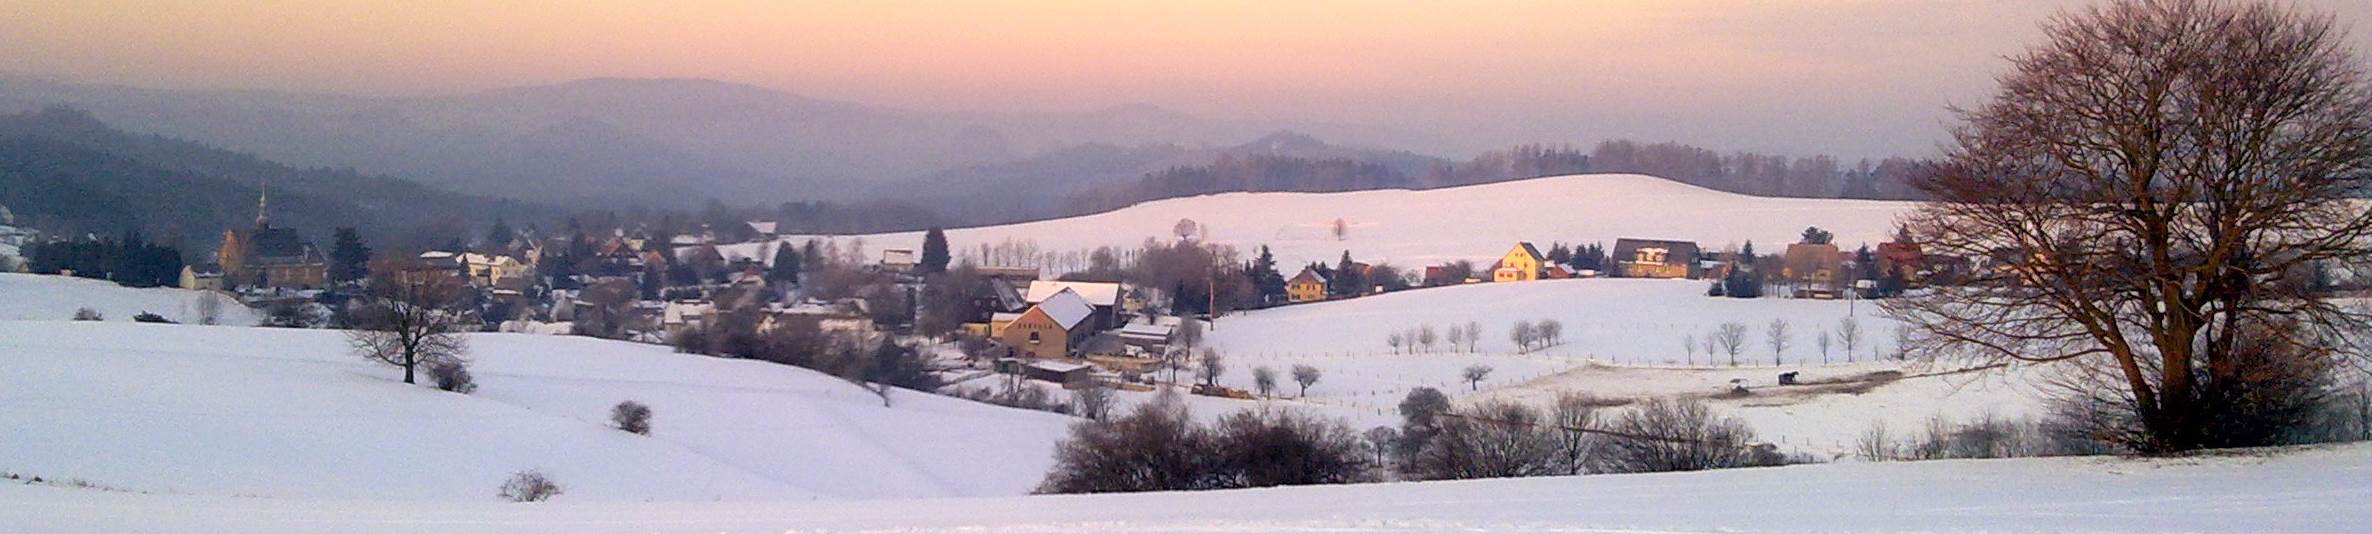 Dorf Hinterhermsdorf im Winter